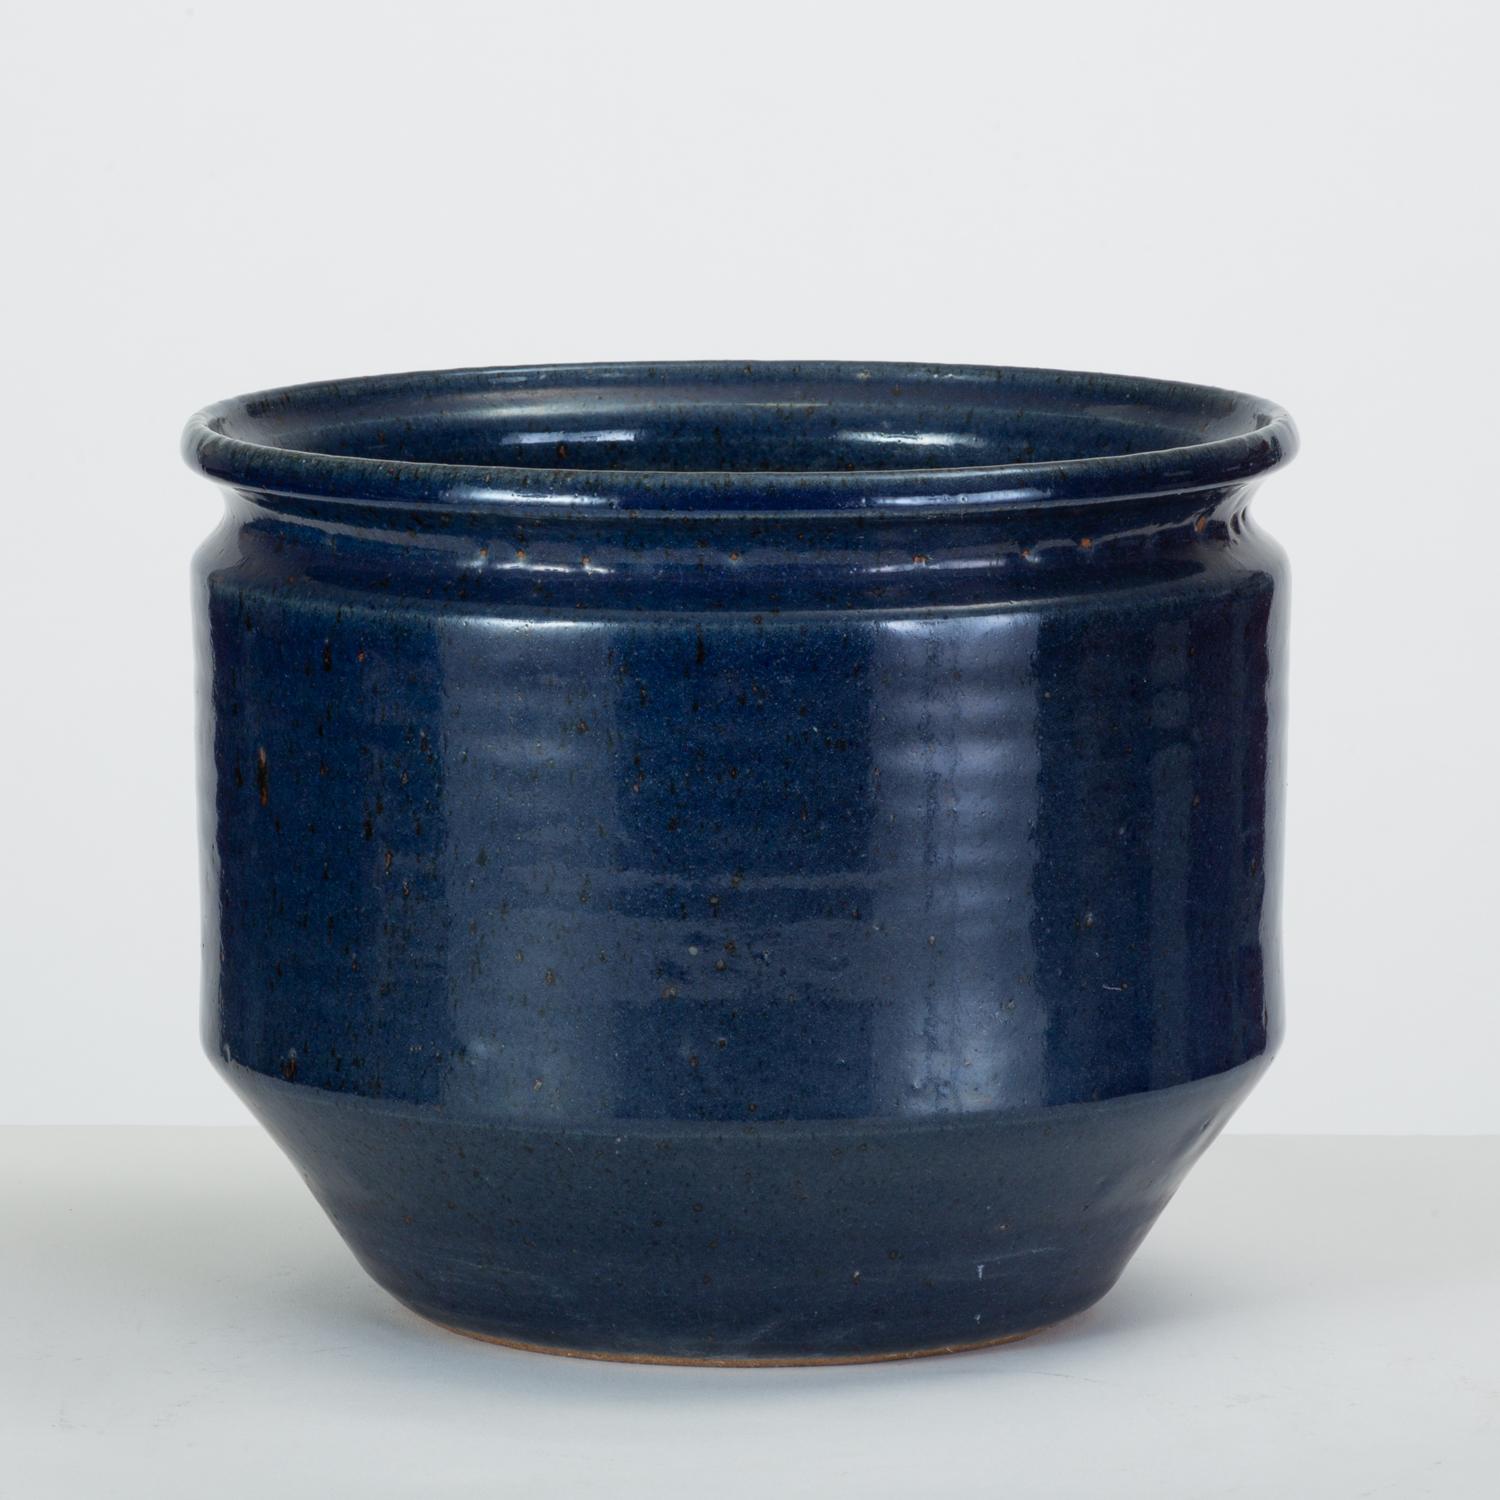 Pair of Blue-Glazed Earthgender Bowl Planters, David Cressey and Robert Maxwell (Moderne der Mitte des Jahrhunderts)